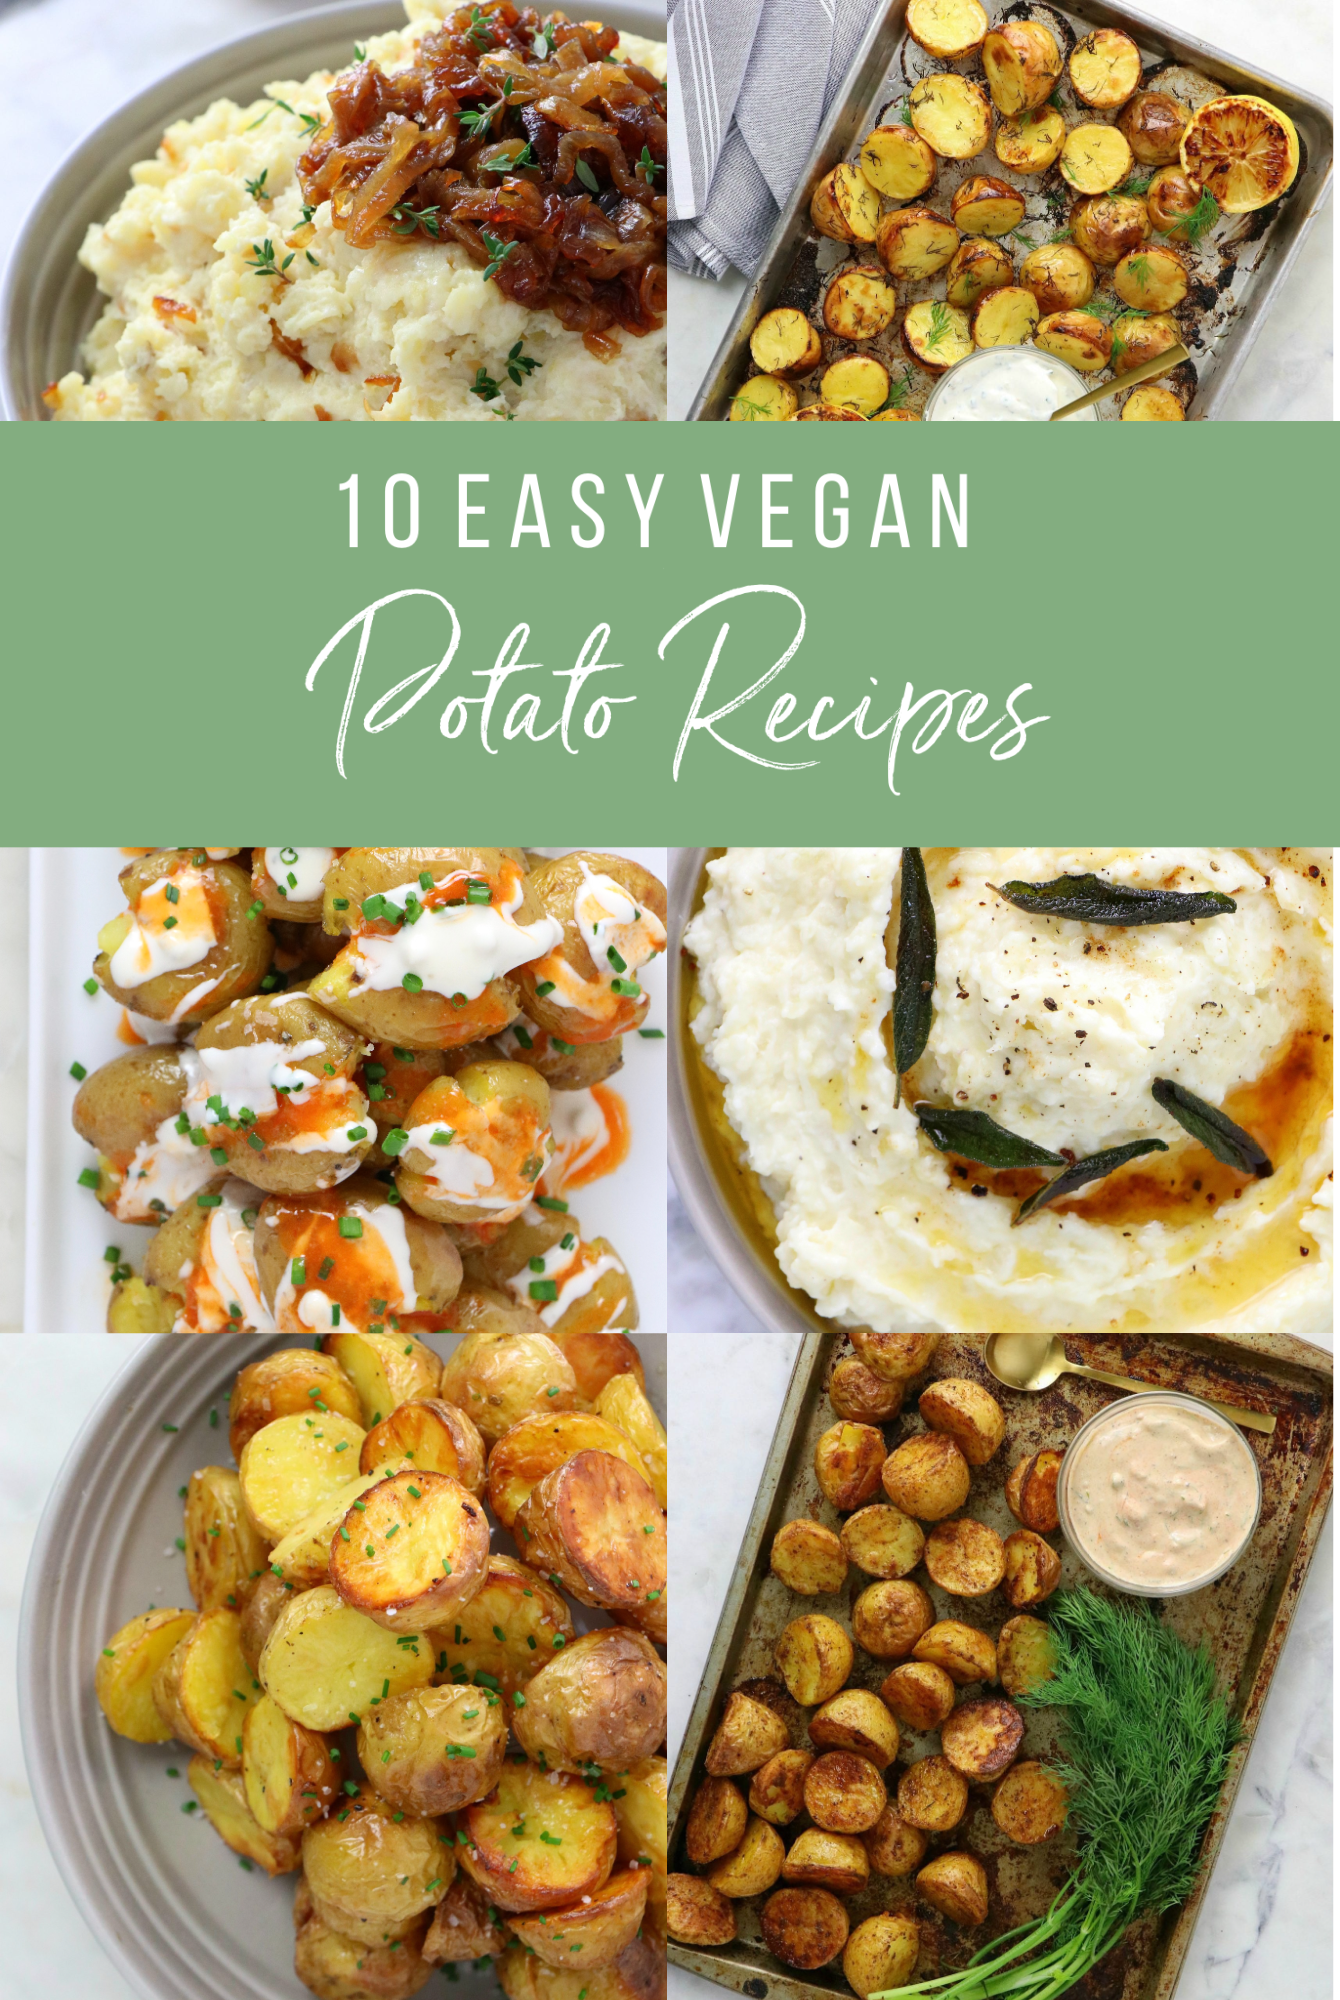 10 Easy Vegan Potato Recipes